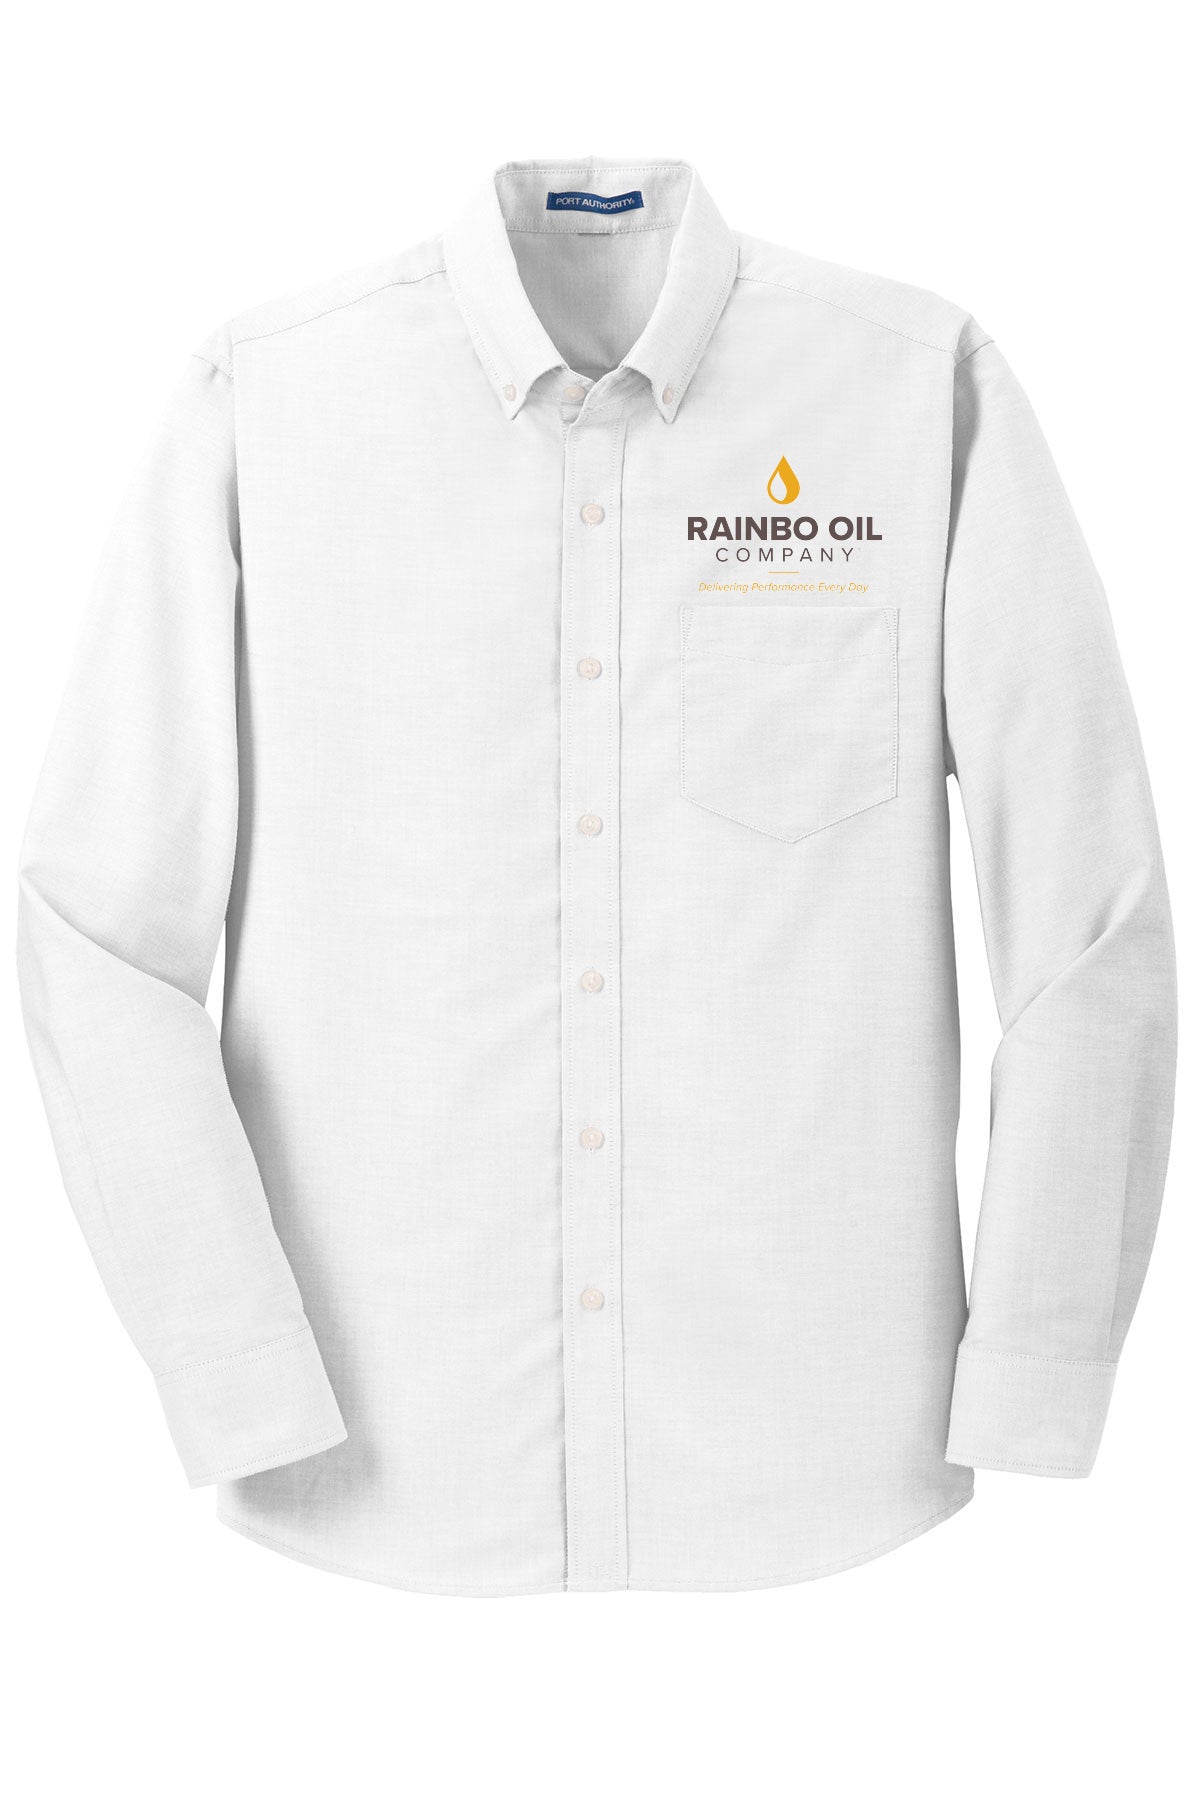 S658- RAINBO OIL Port Authority® SuperPro™ Oxford Shirt